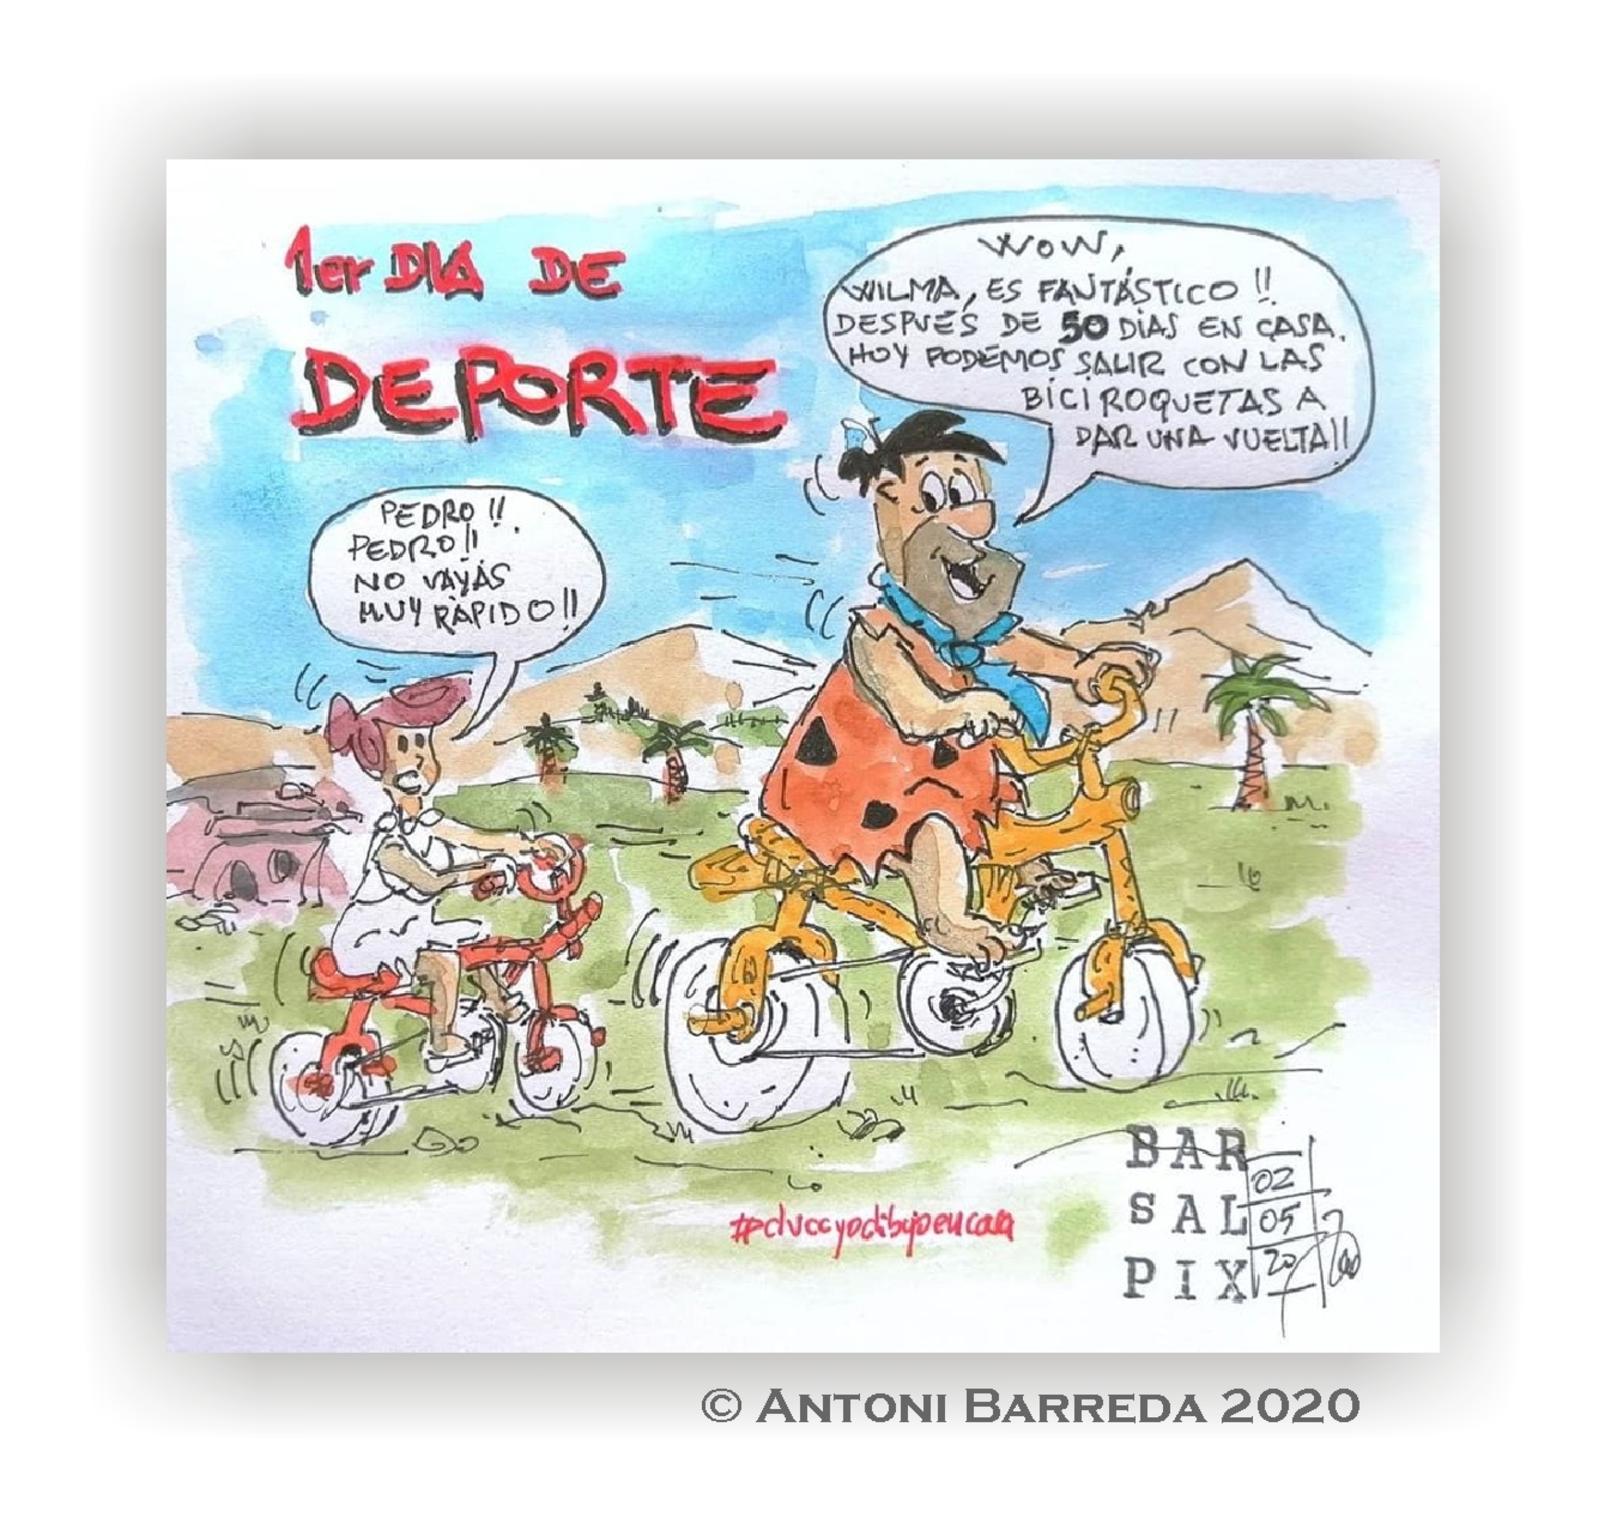  Antoni Barreda 2020